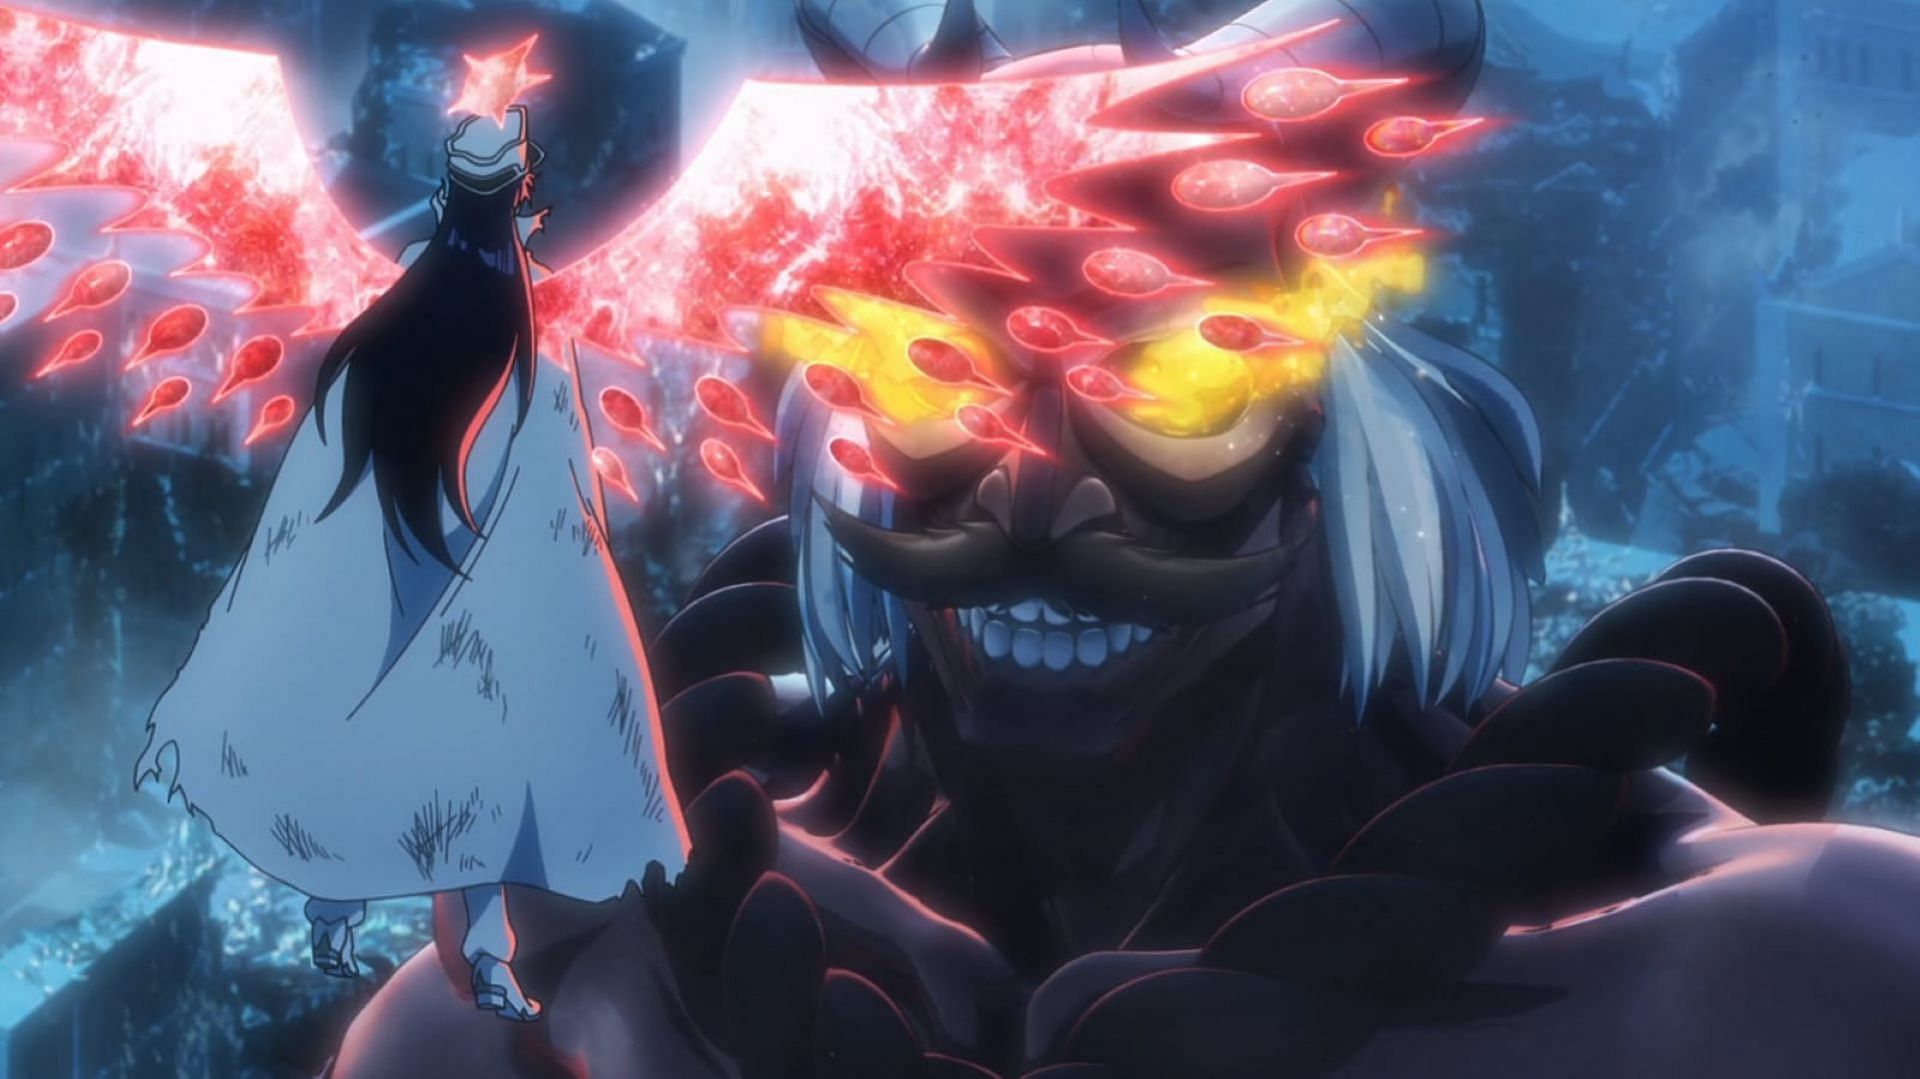 Bleach TYBW part 2 Episode 4: Anime vs Manga comparison